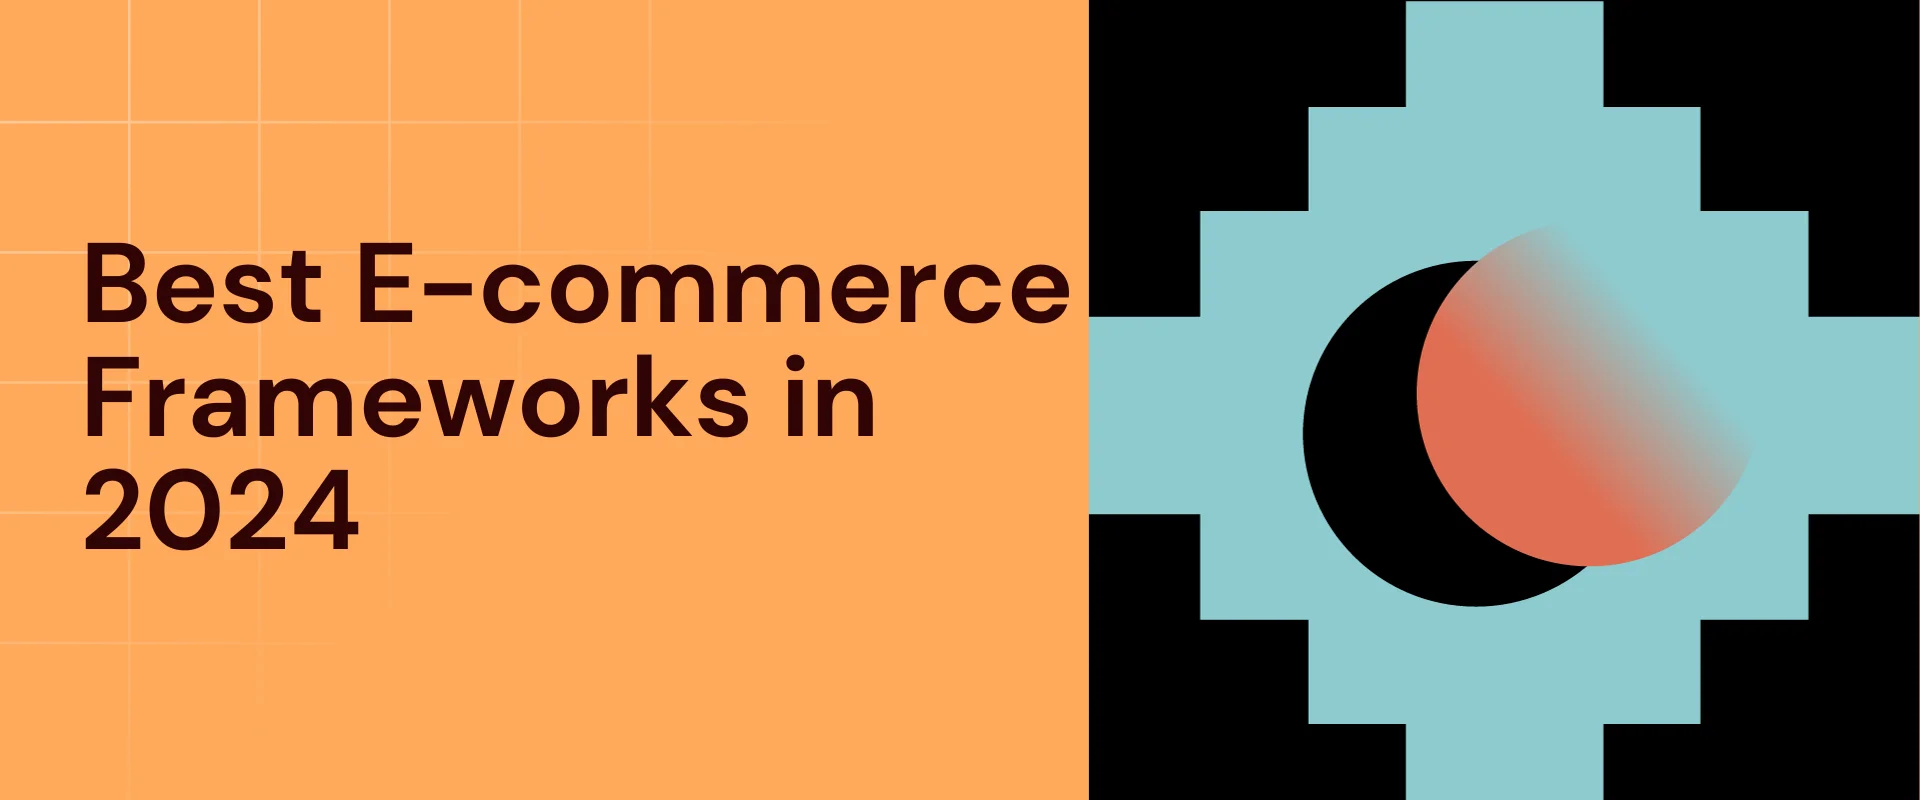 23 Best E-commerce Frameworks in 2024 (Detailed Comparison)